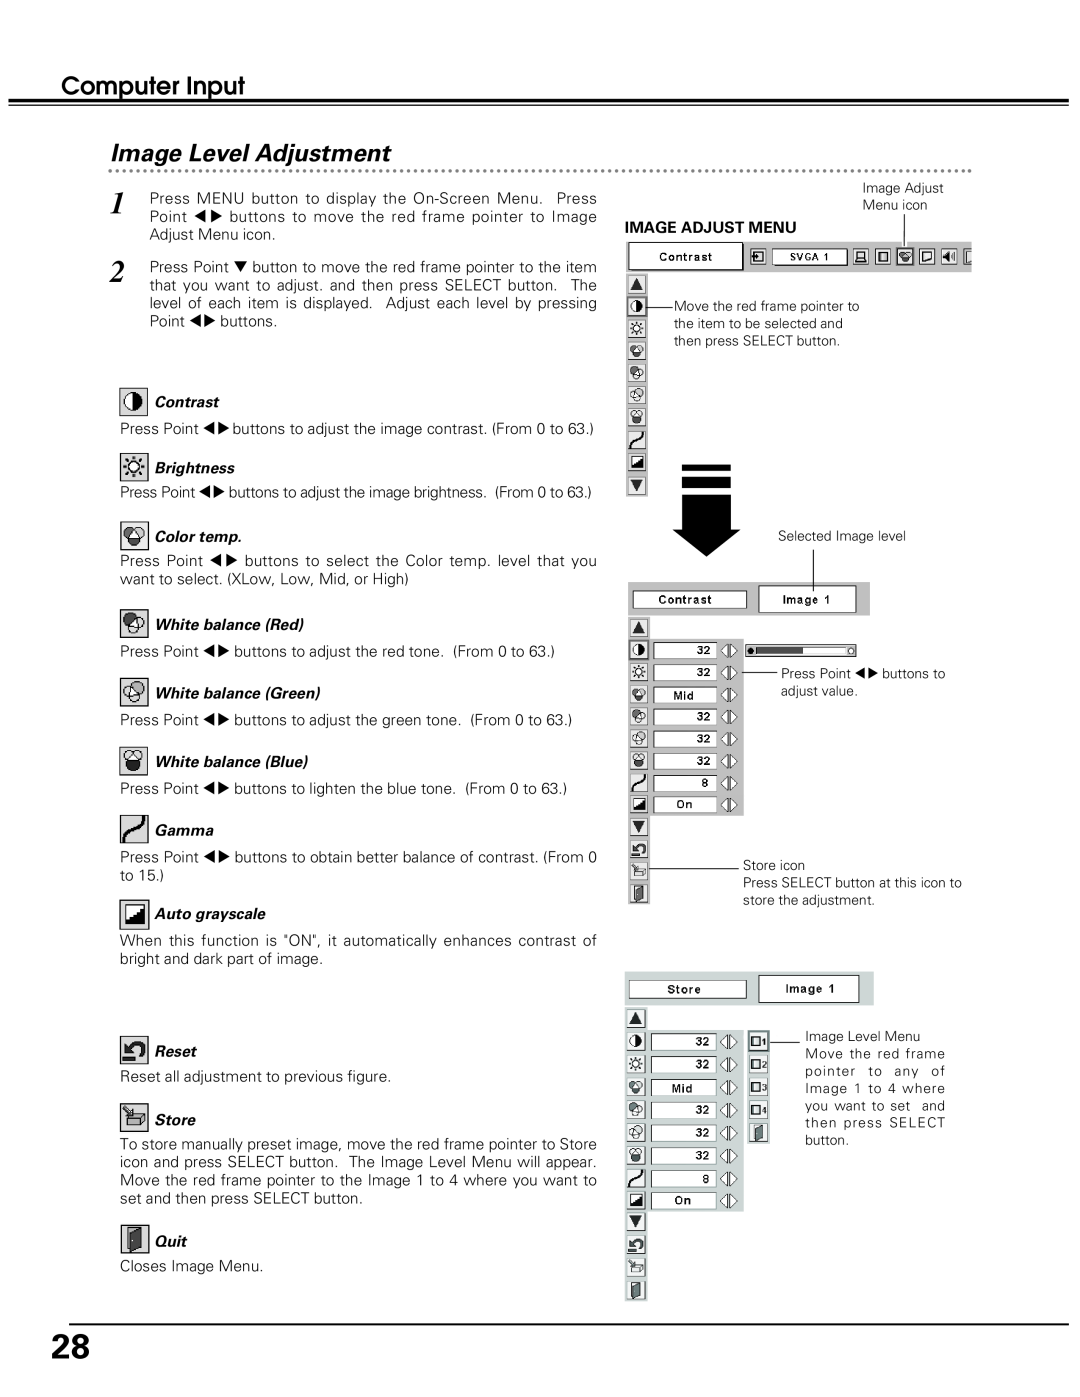 Eiki LC-SD10 owner manual Image Level Adjustment, Computer Input, Image Adjust Menu 